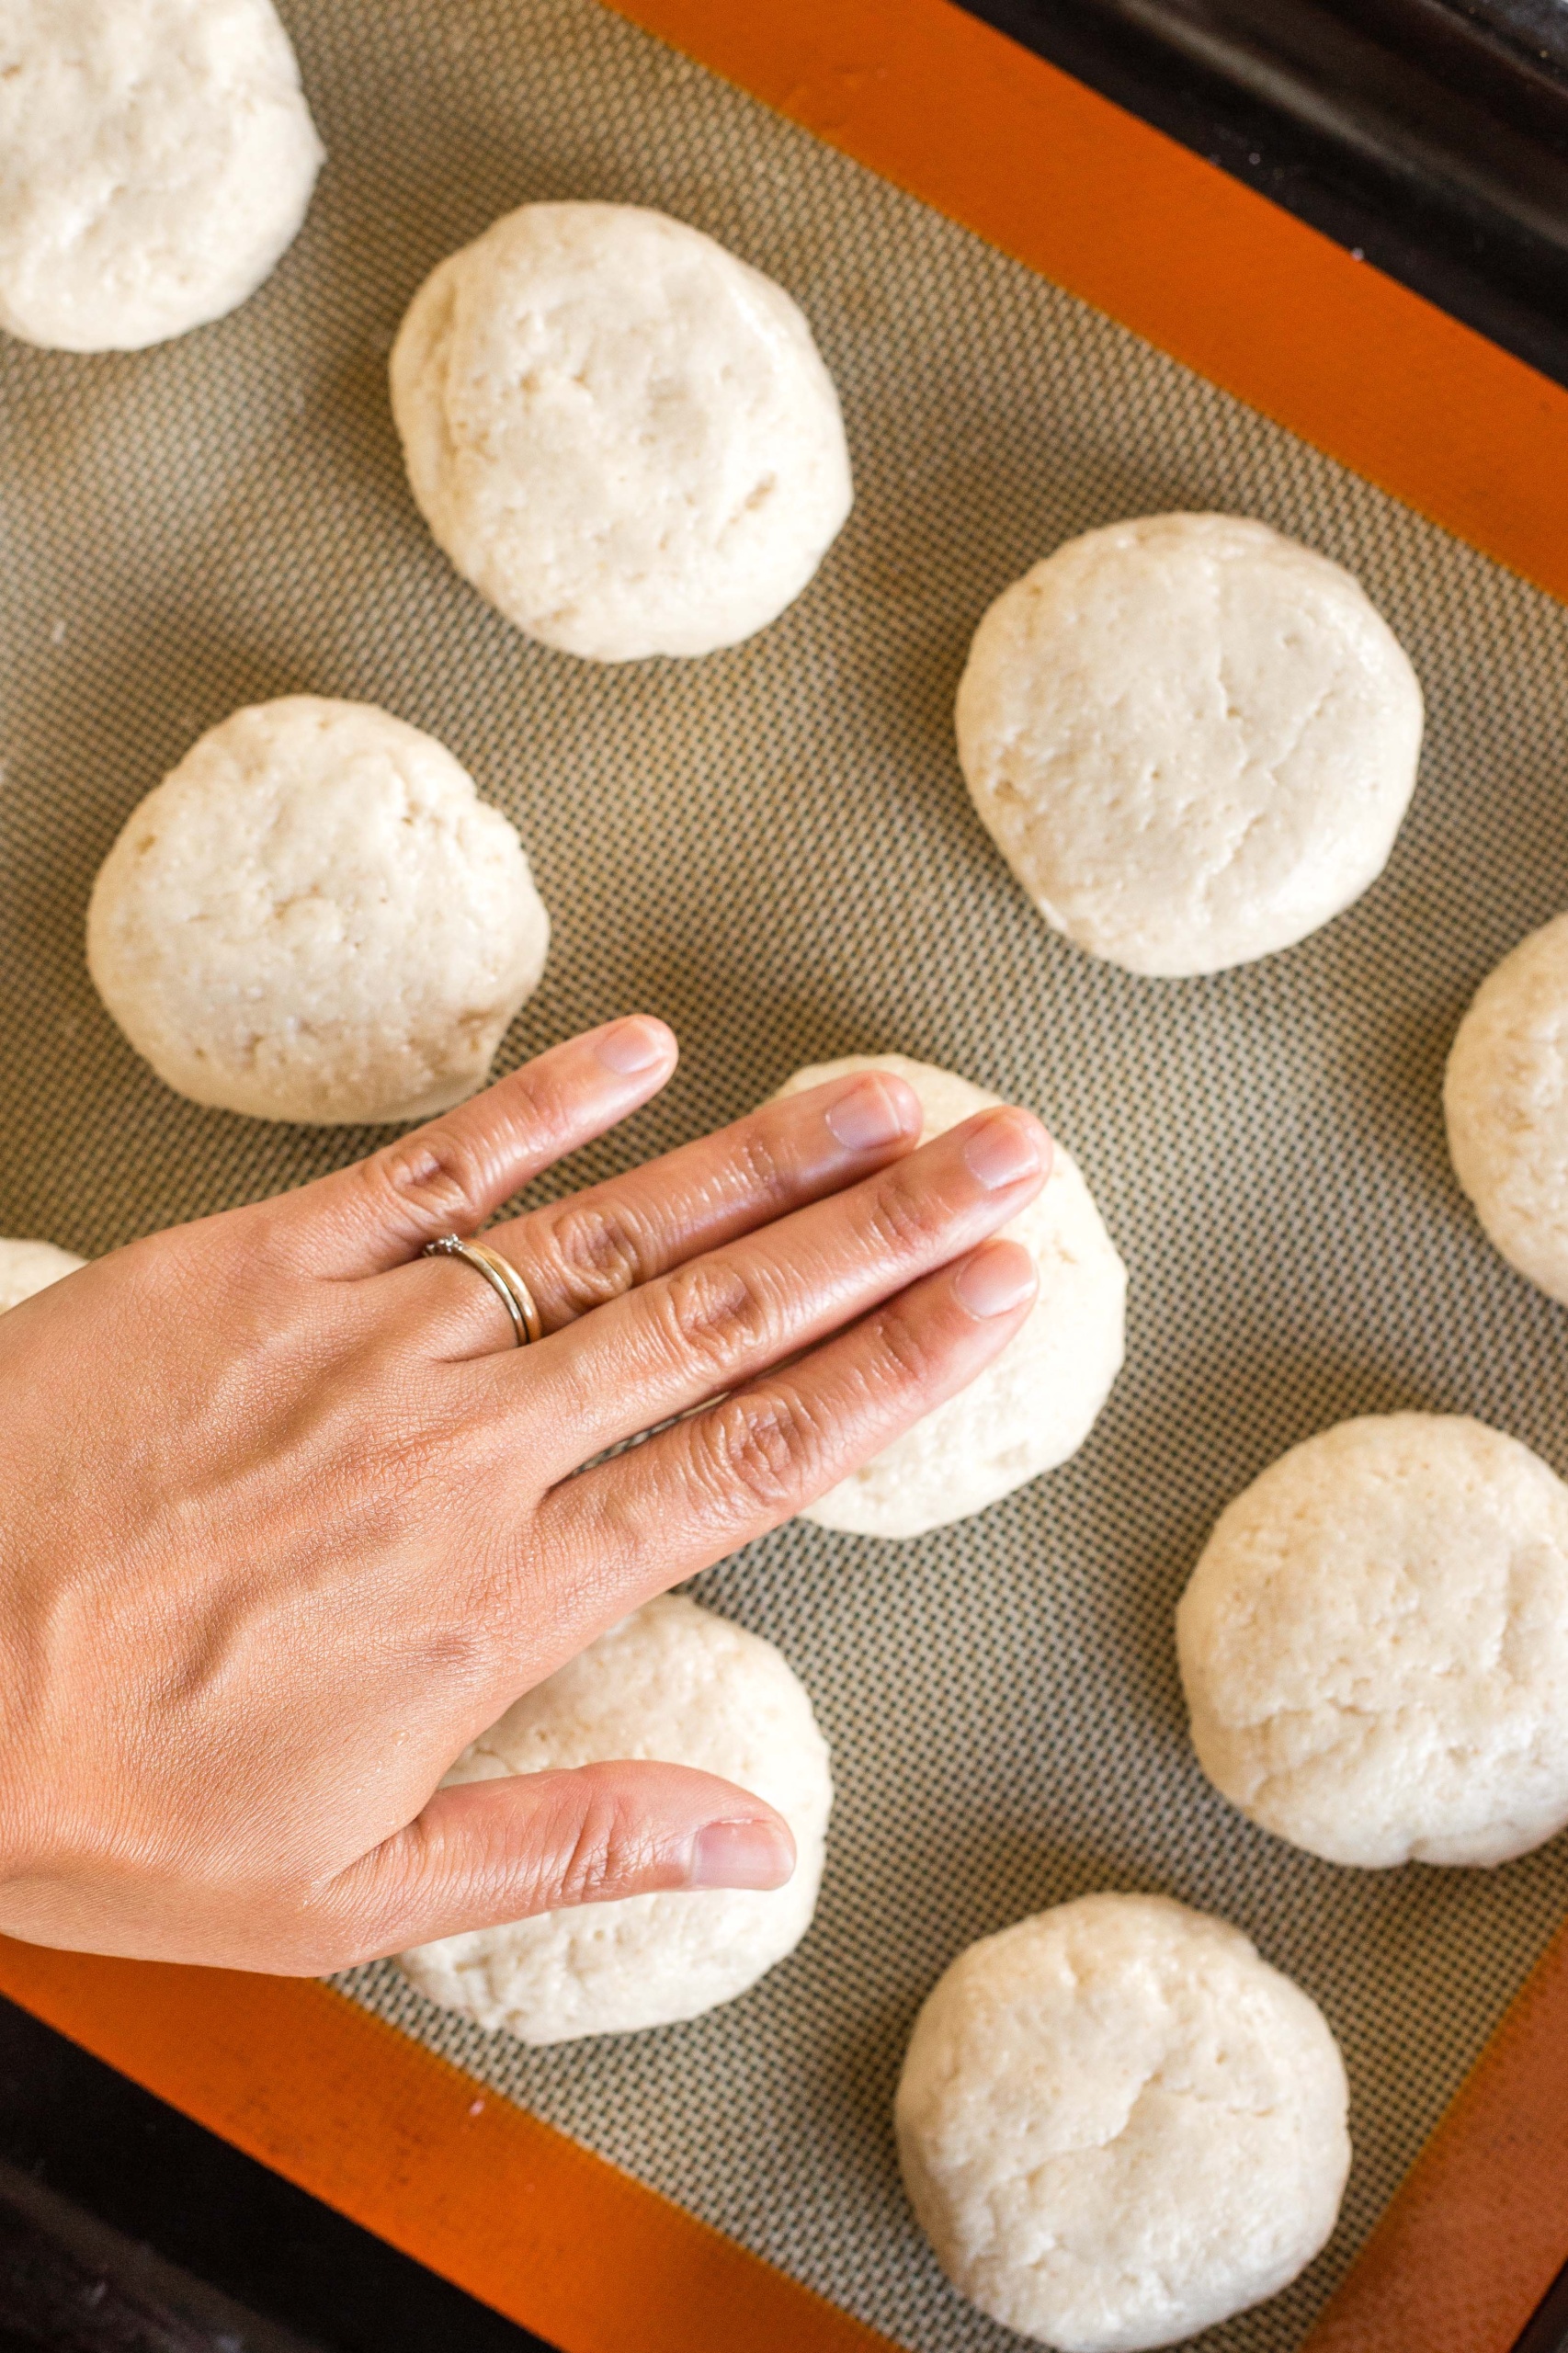 Using fingers to flatten balls of dough.